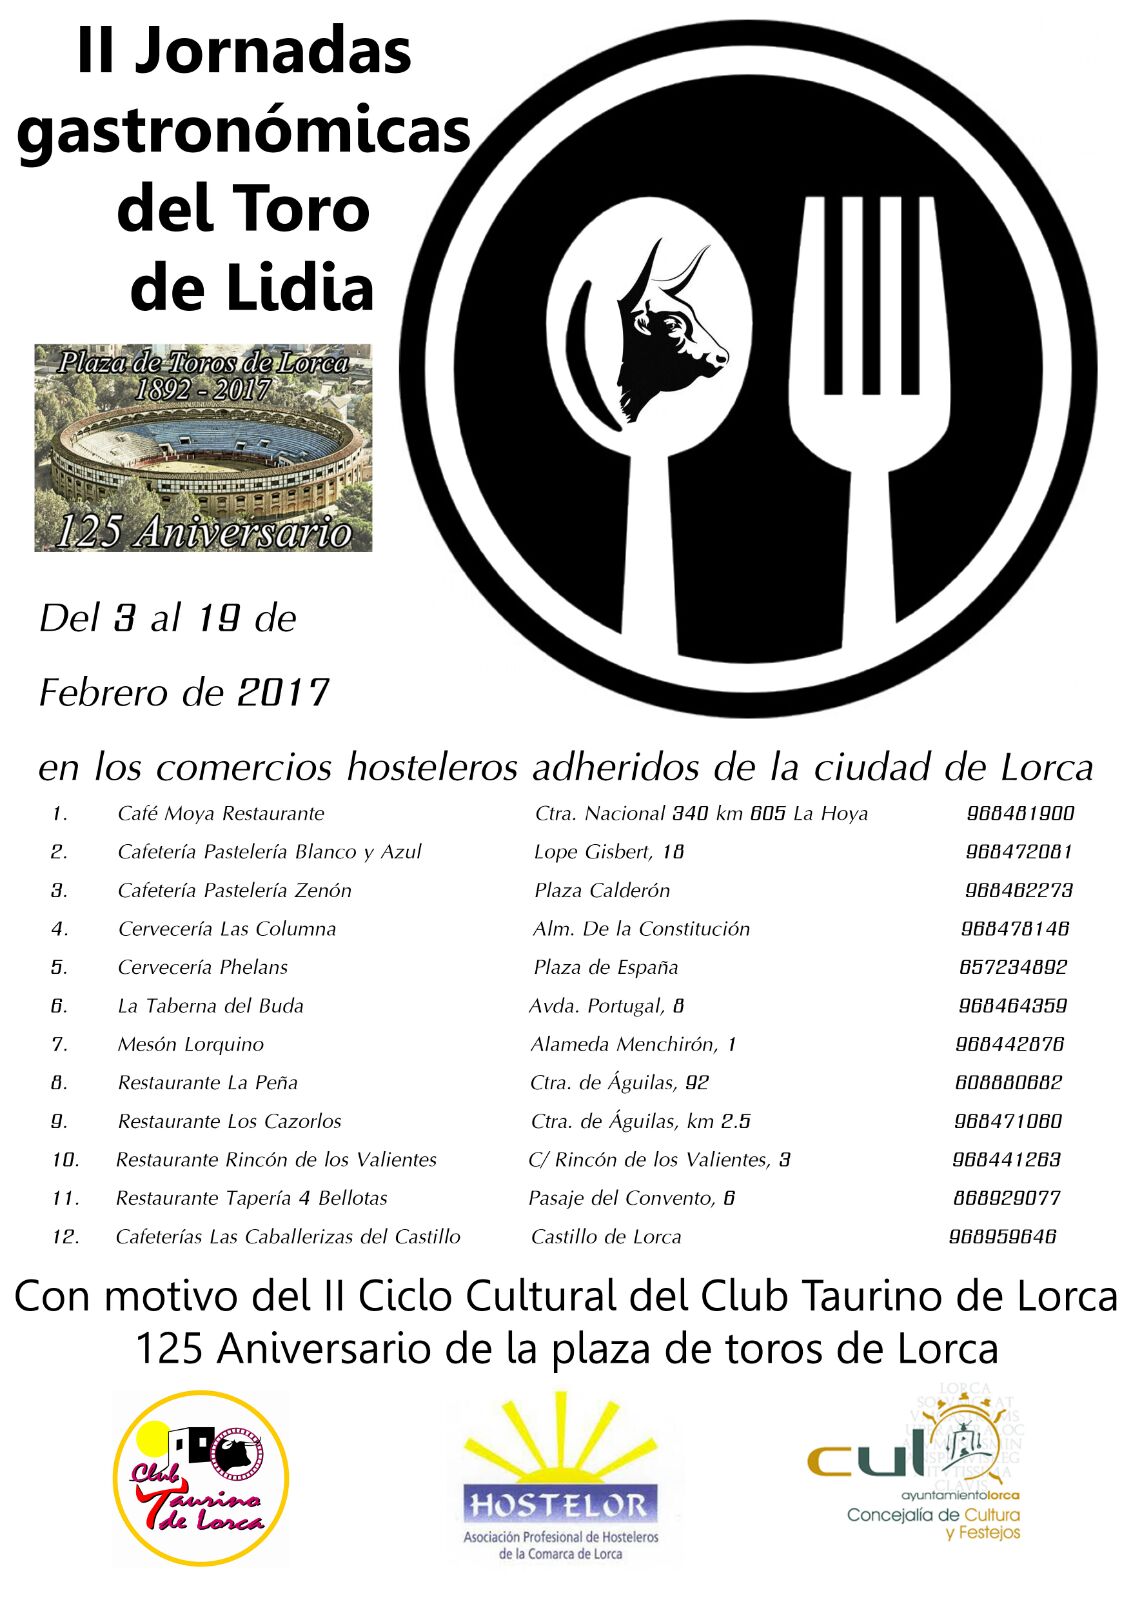 II Jornada Gastronmica Toro de Lidia